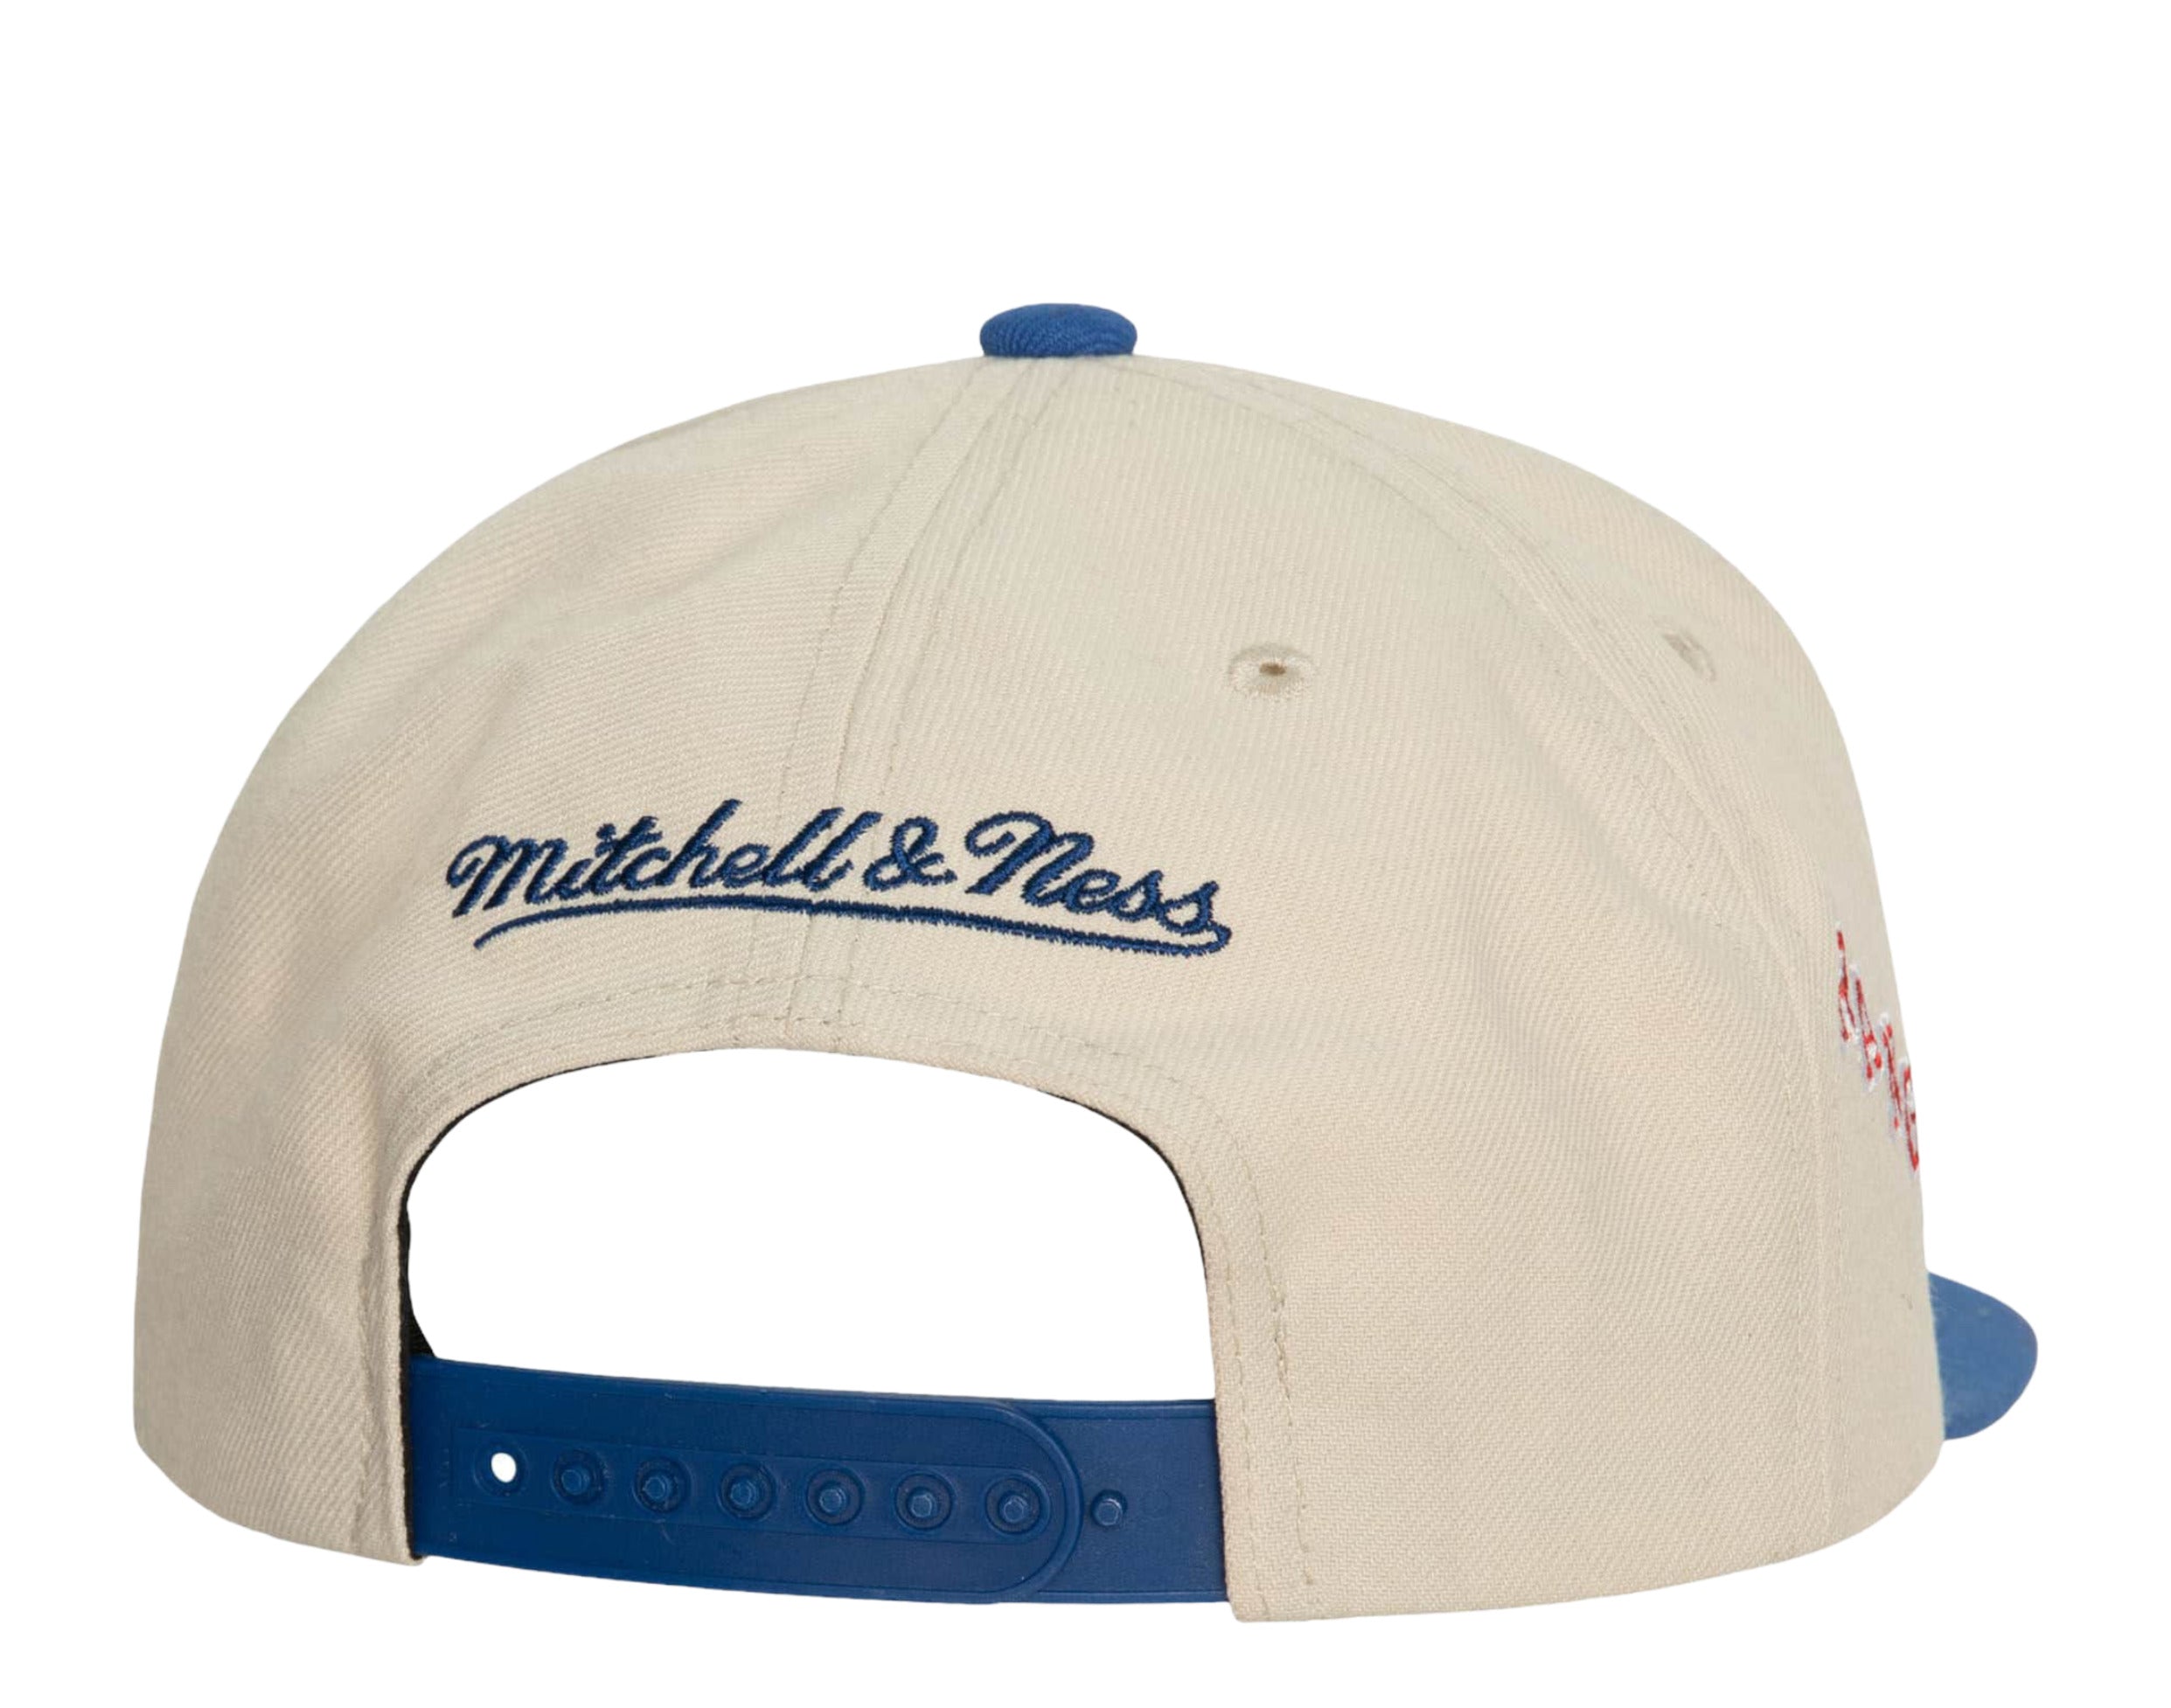 NHL New York Rangers Vintage Adjustable Trucker Hat